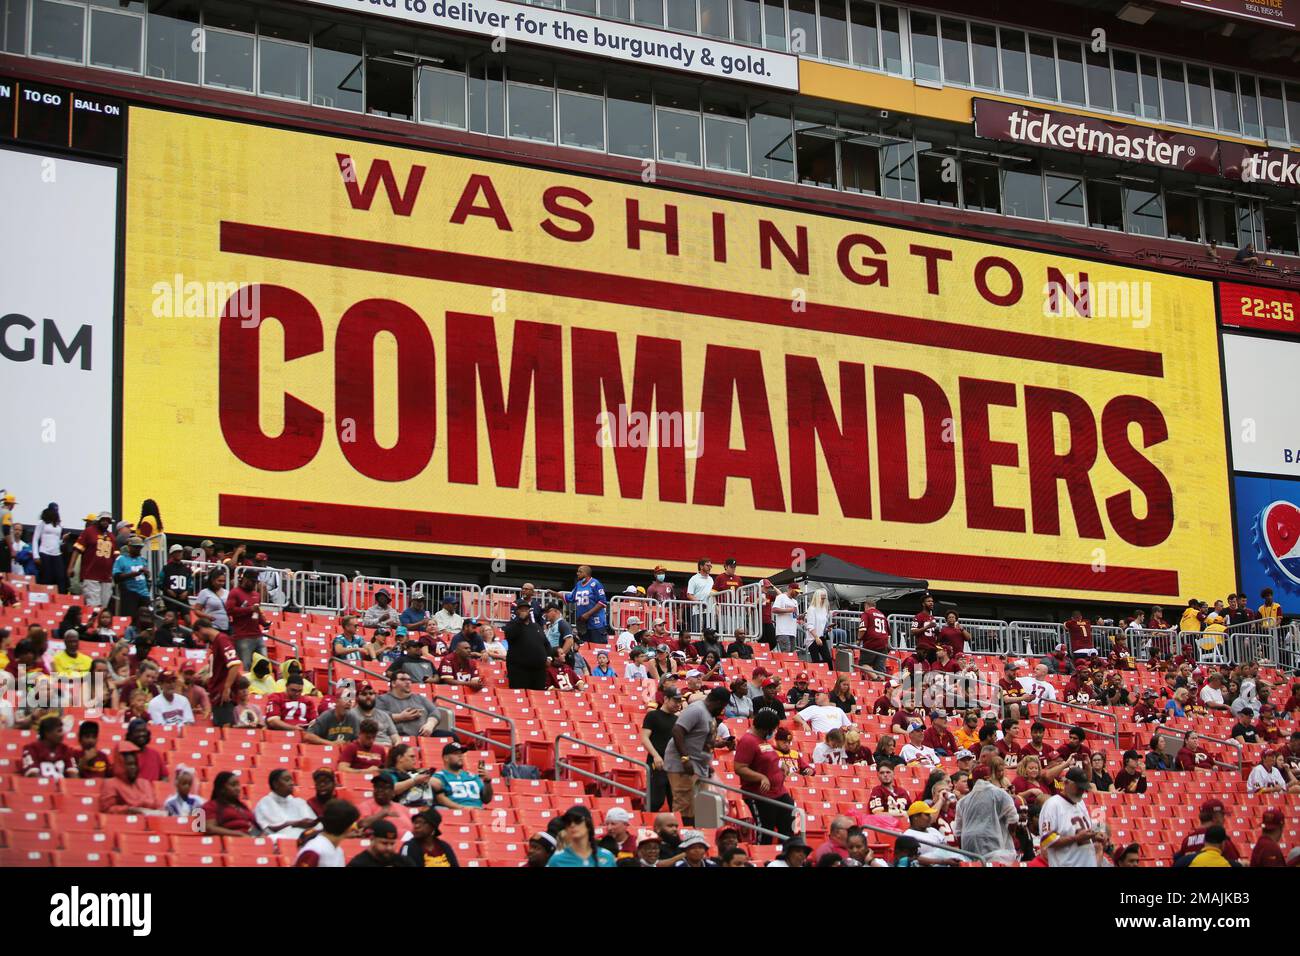 Washington Commanders signage on display before an NFL football